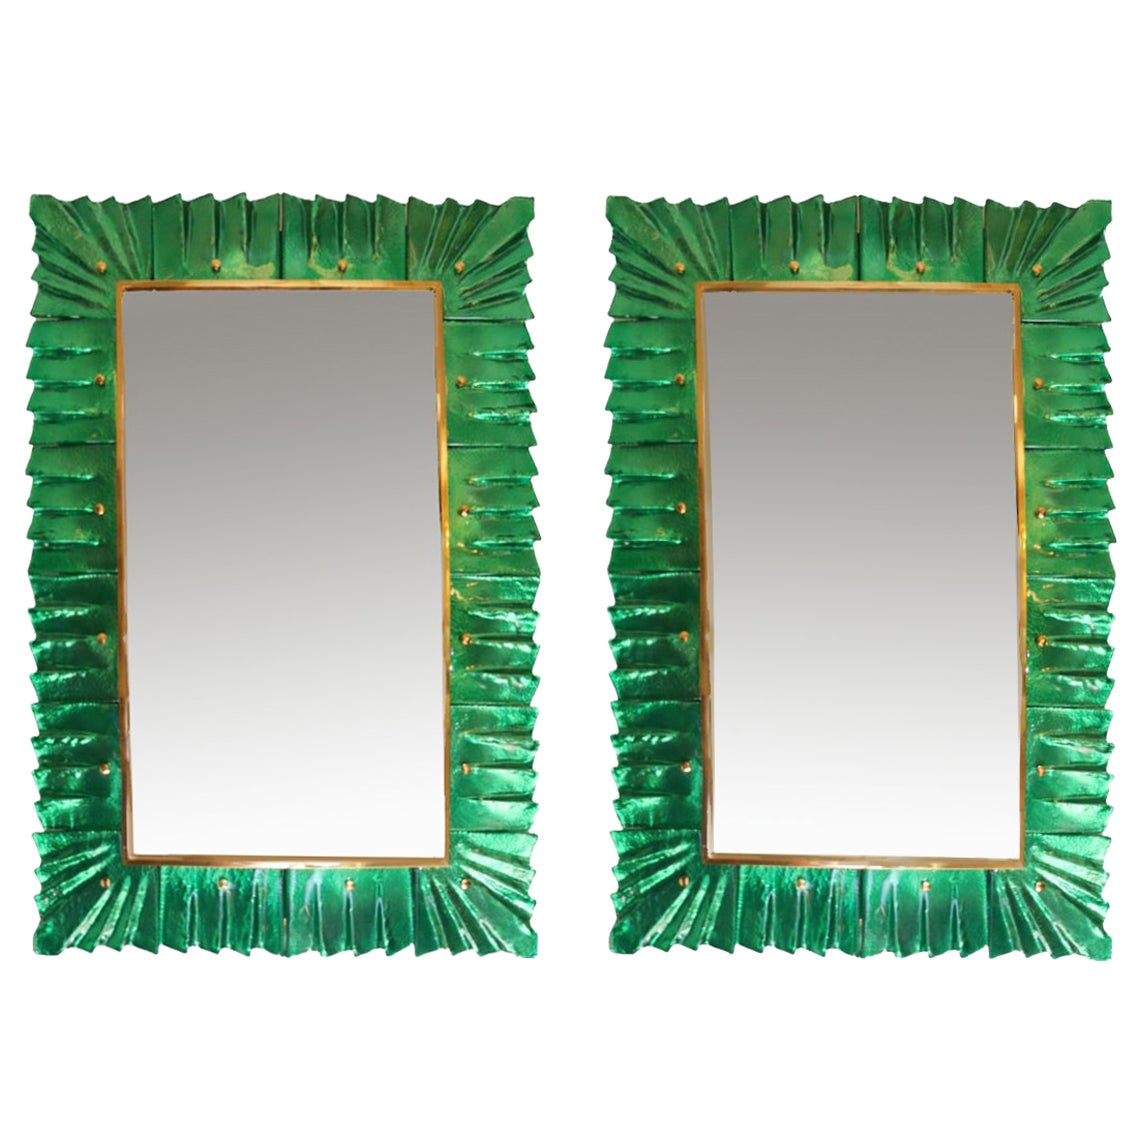 Paire de miroirs rectangulaires encadrés en verre de Murano vert émeraude, en stock